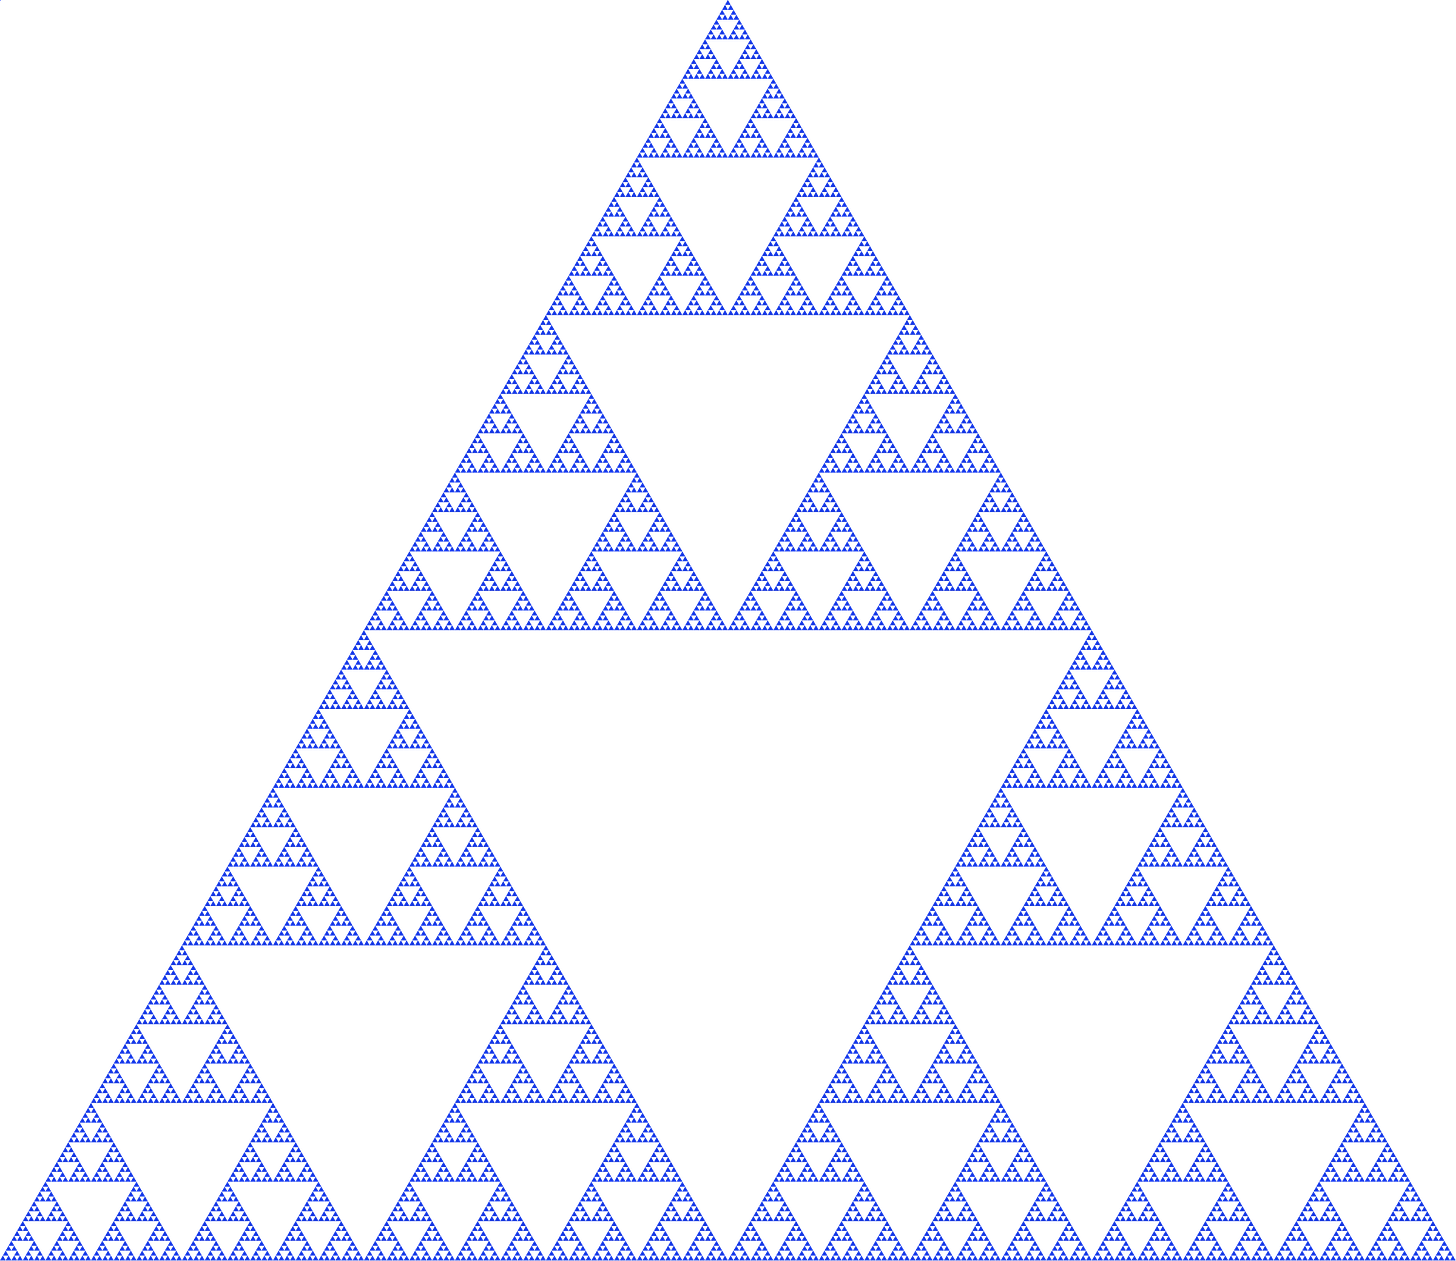 Sierpinski triangle - Wikipedia